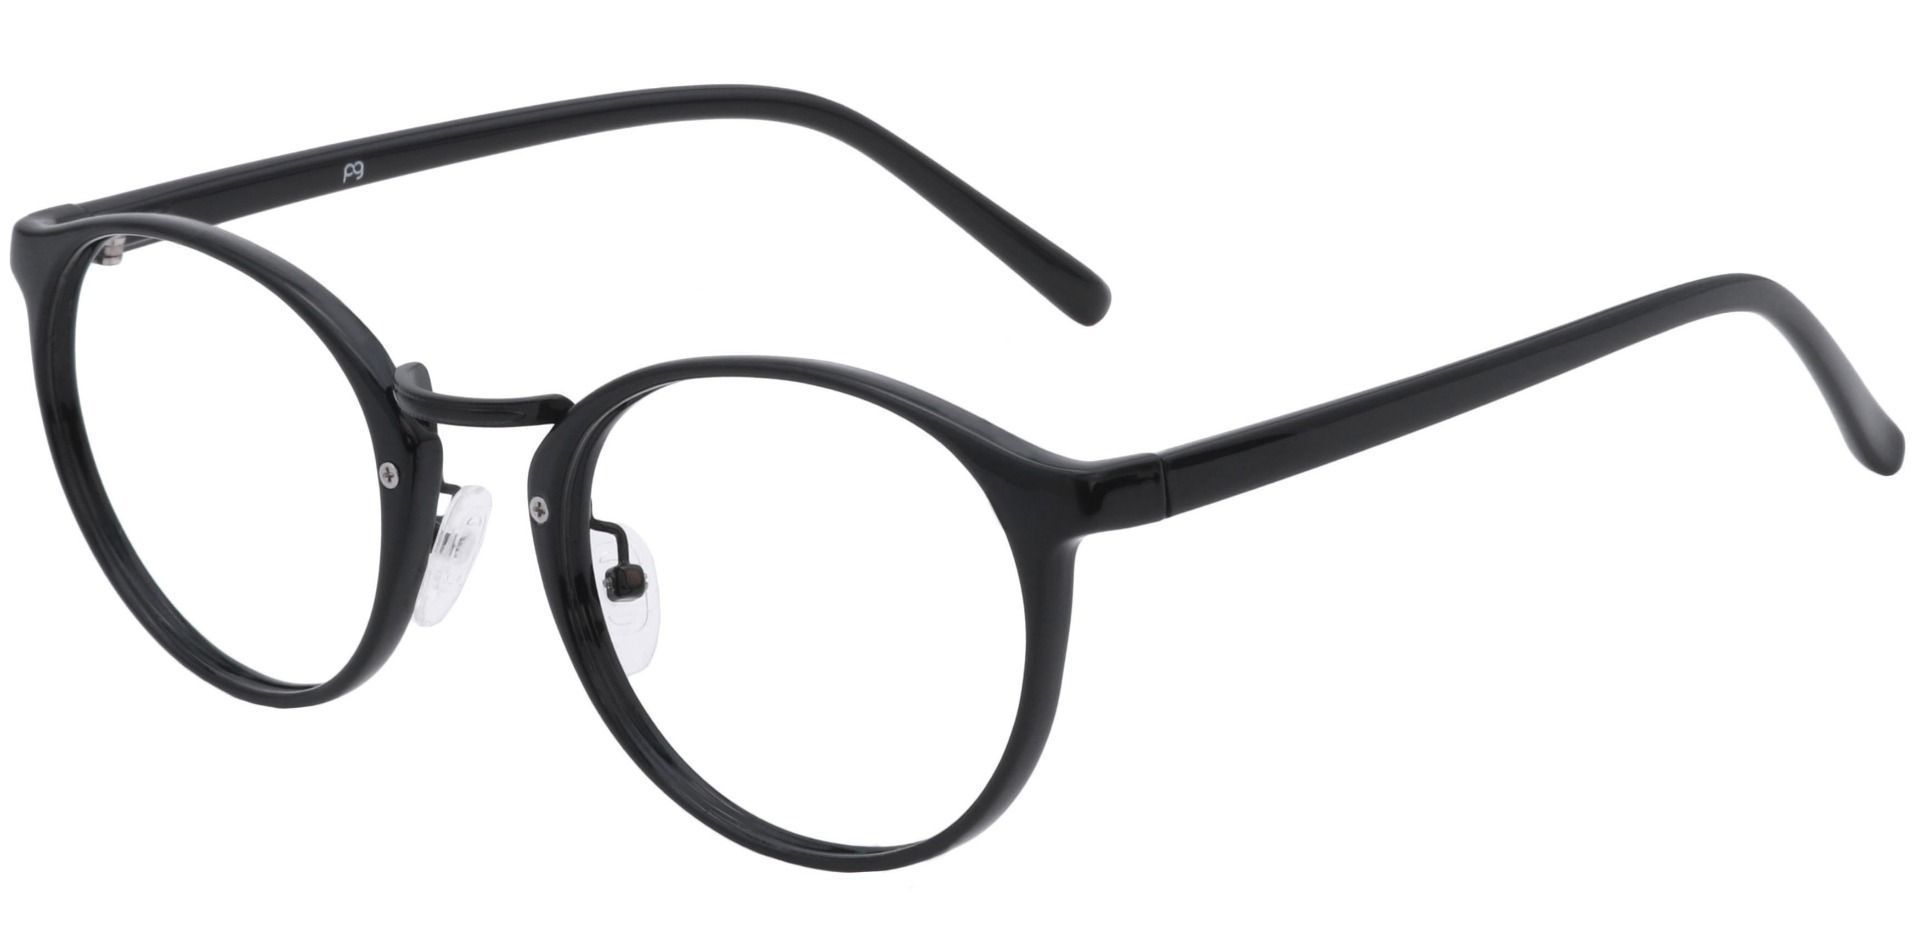 Bloom Oval Reading Glasses - Black